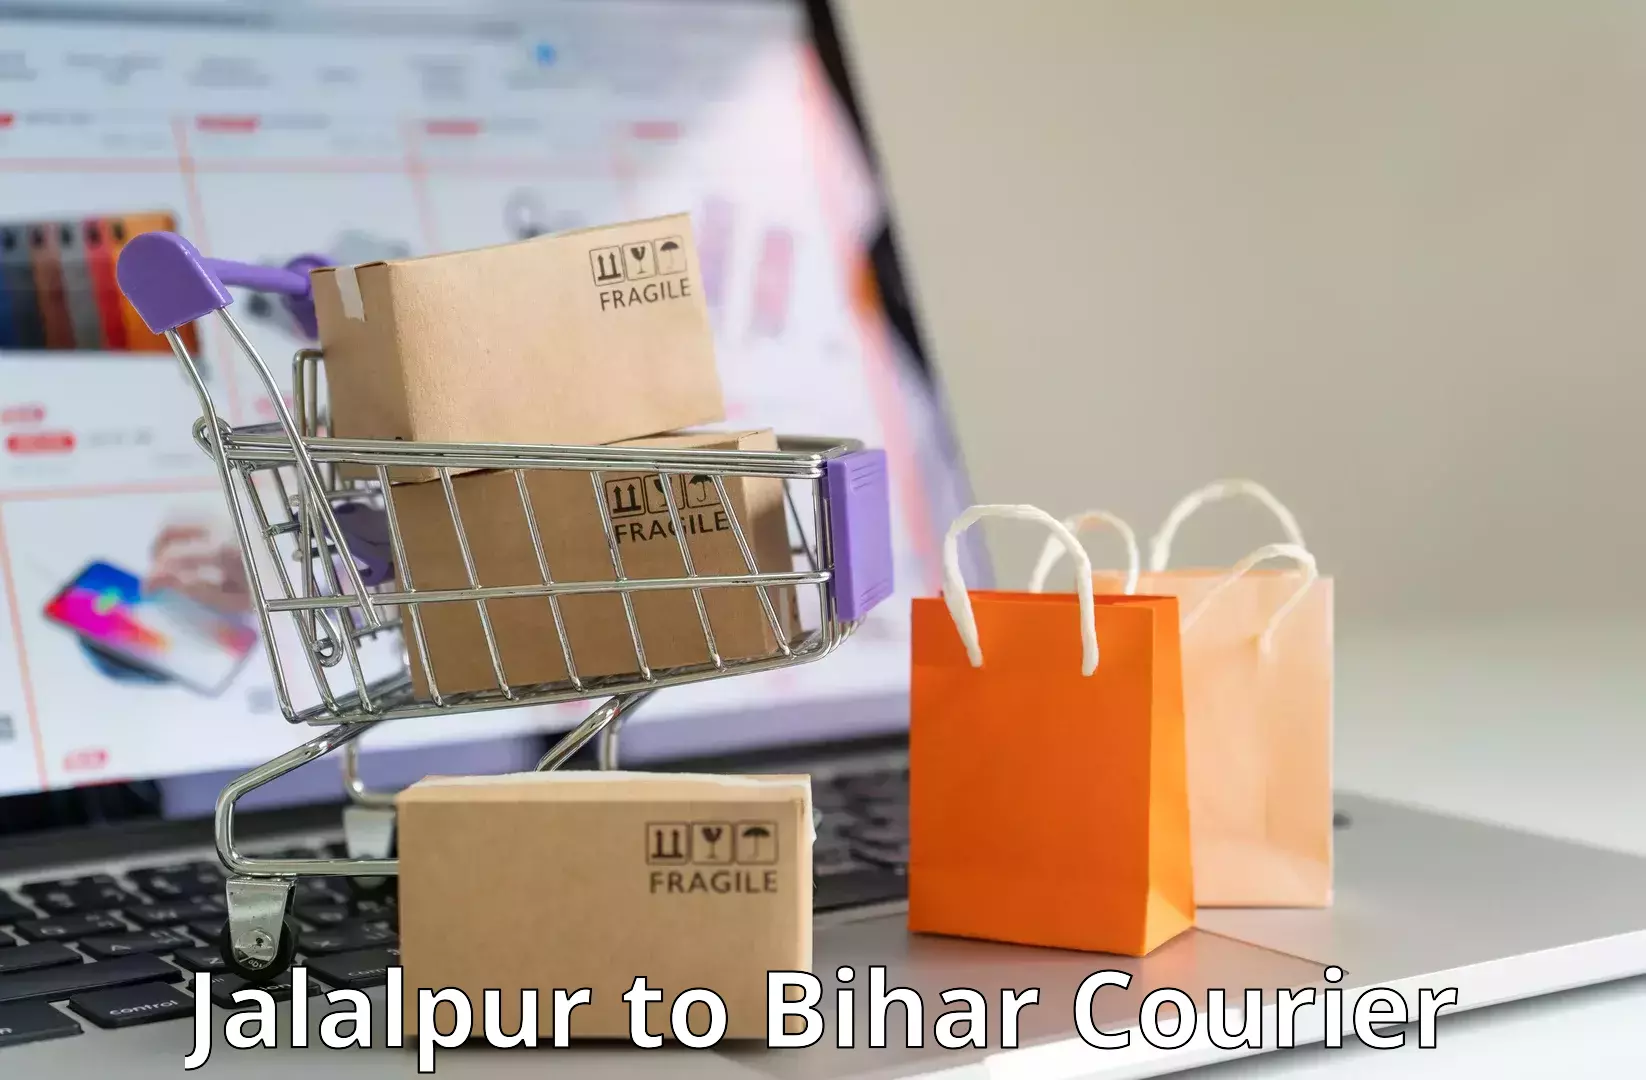 Courier service partnerships Jalalpur to Bihta